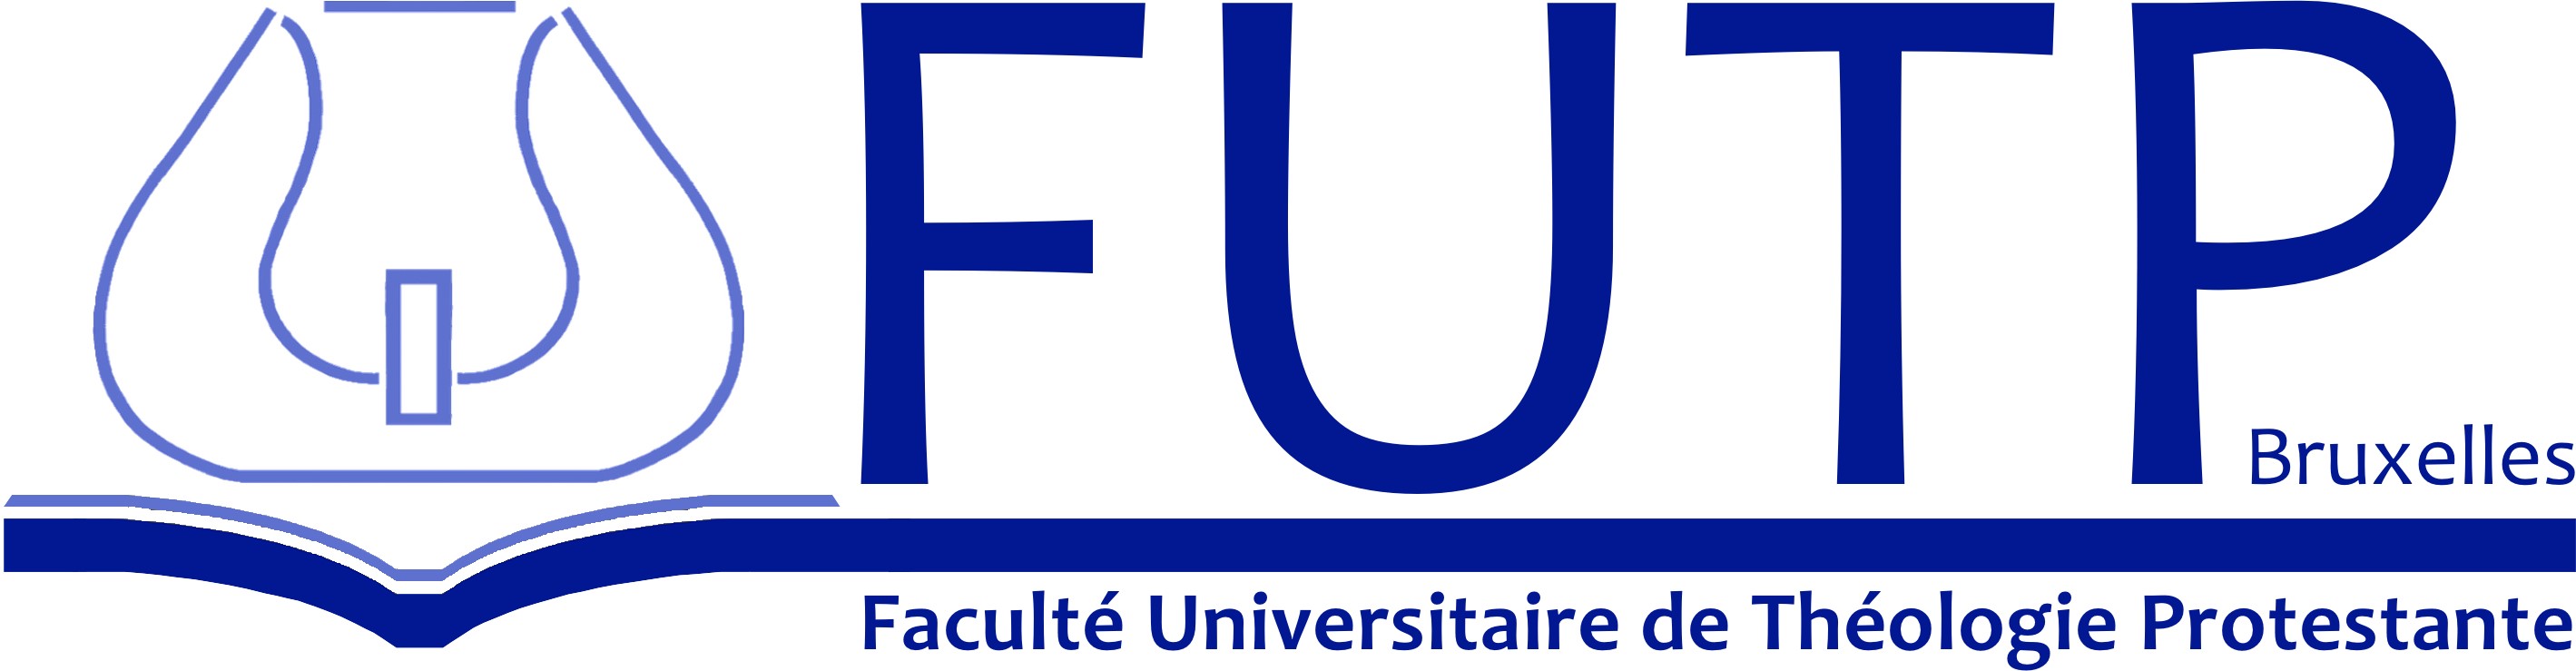 logo FUTB